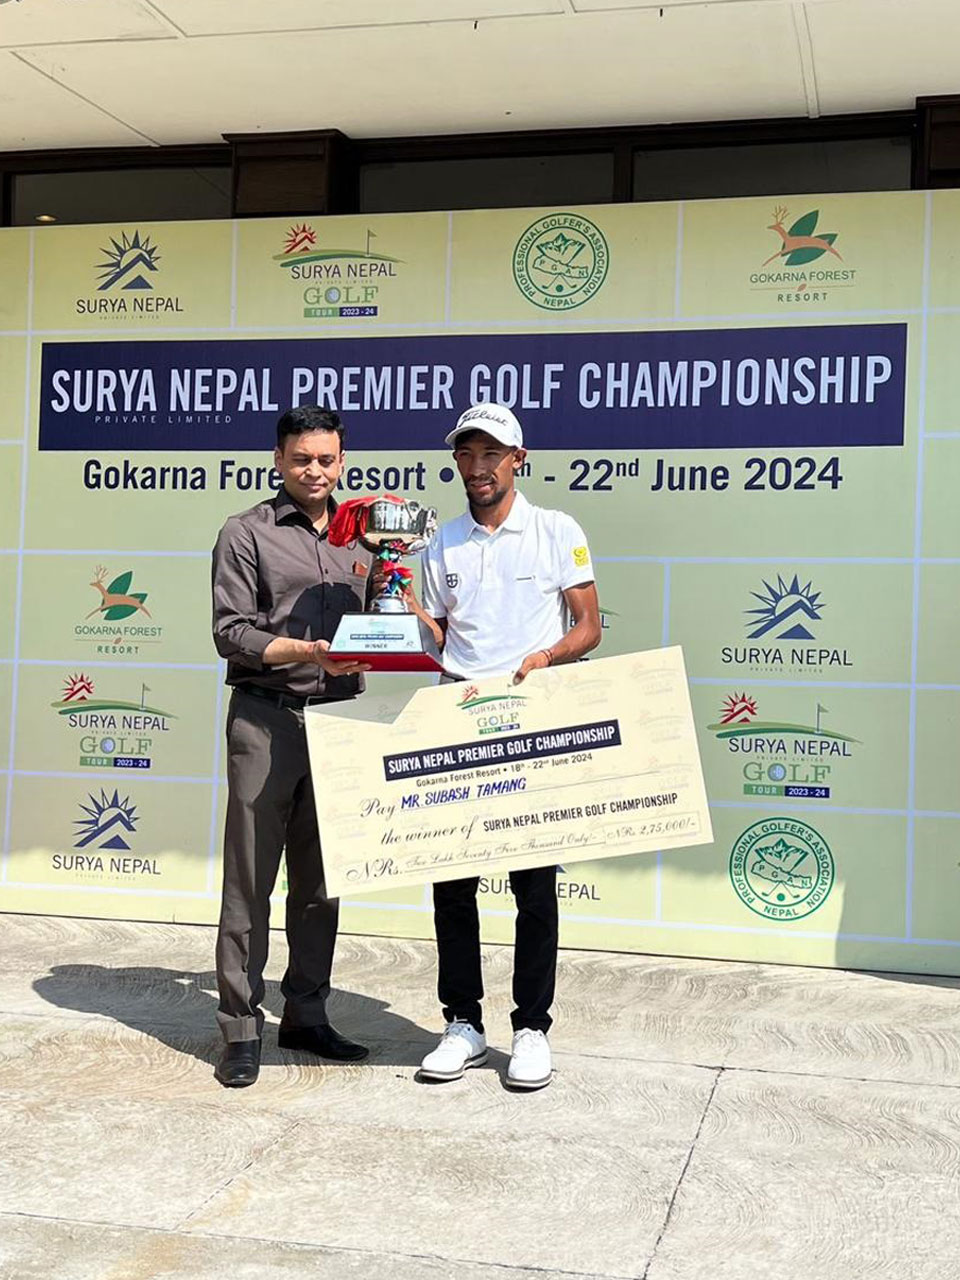 Subash Tamang won the Surya Nepal Premier Golf Championship, a professional tournament held at Gokarna Forest Resort, Nepal.